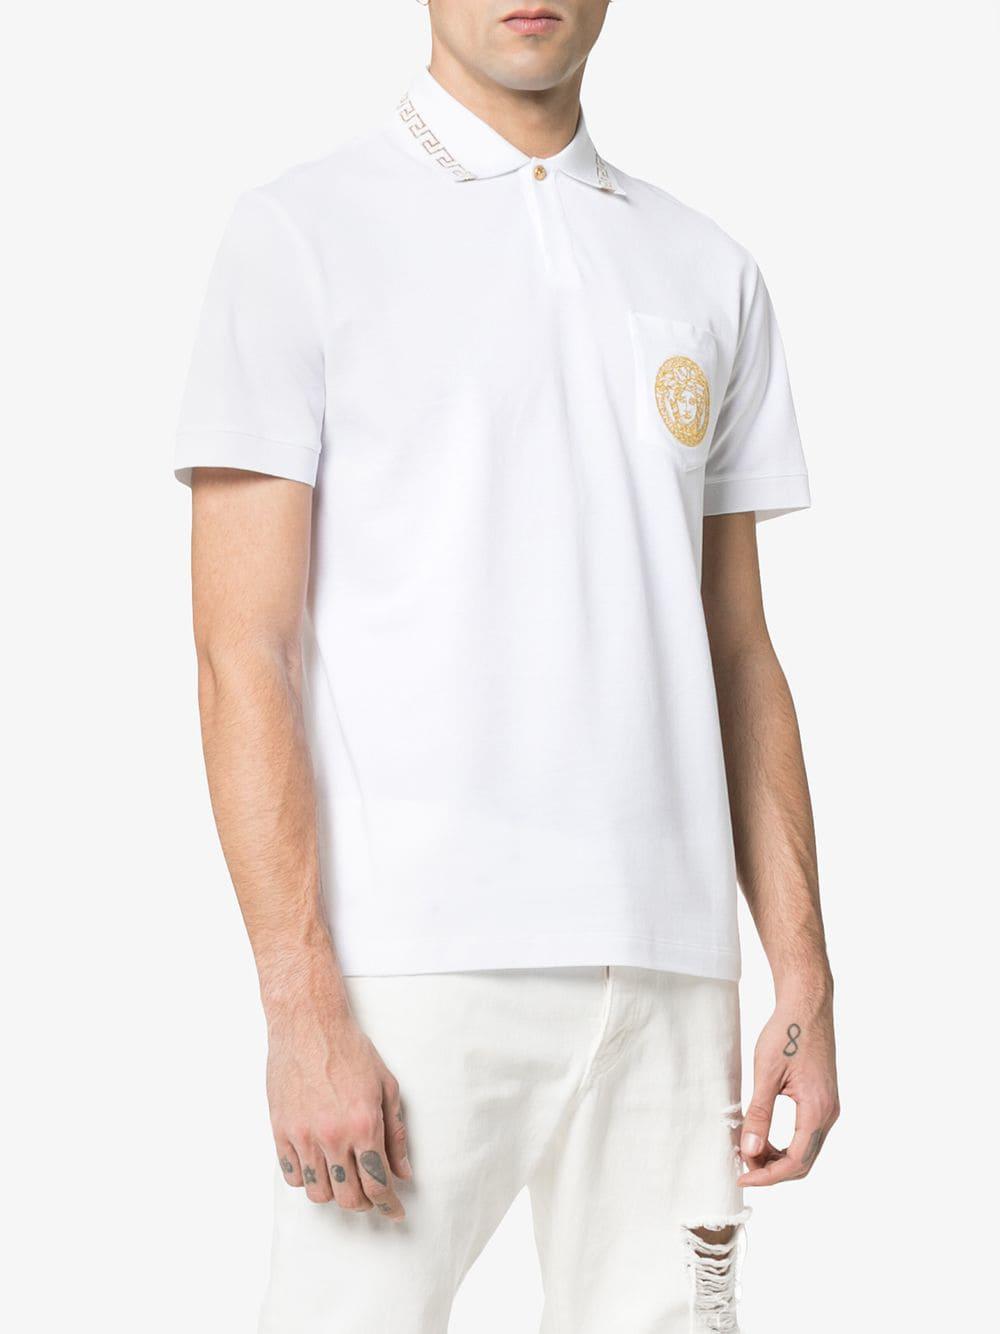 Versace Cotton Gold Medusa Polo Shirt in White for Men - Lyst